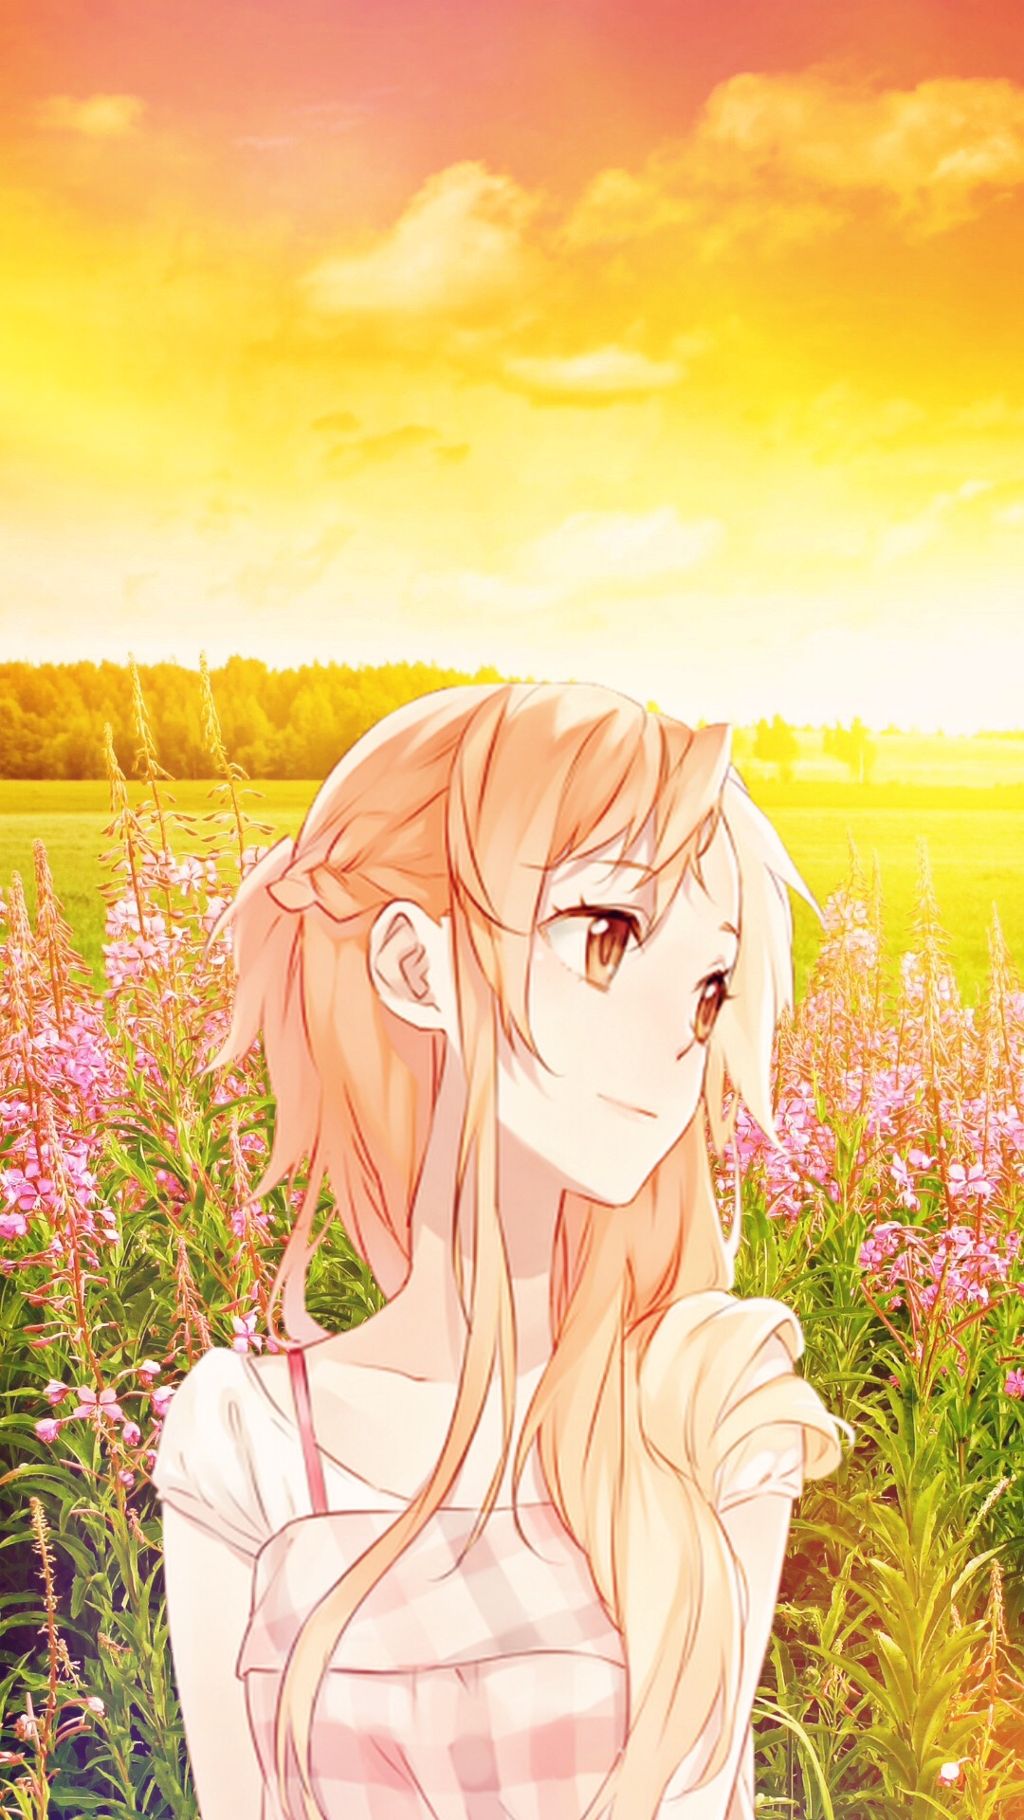 #sao #swordartonline #asunayuuki #asuna #spring #girl - Anime Girl With Strawberry Blonde Hair - HD Wallpaper 